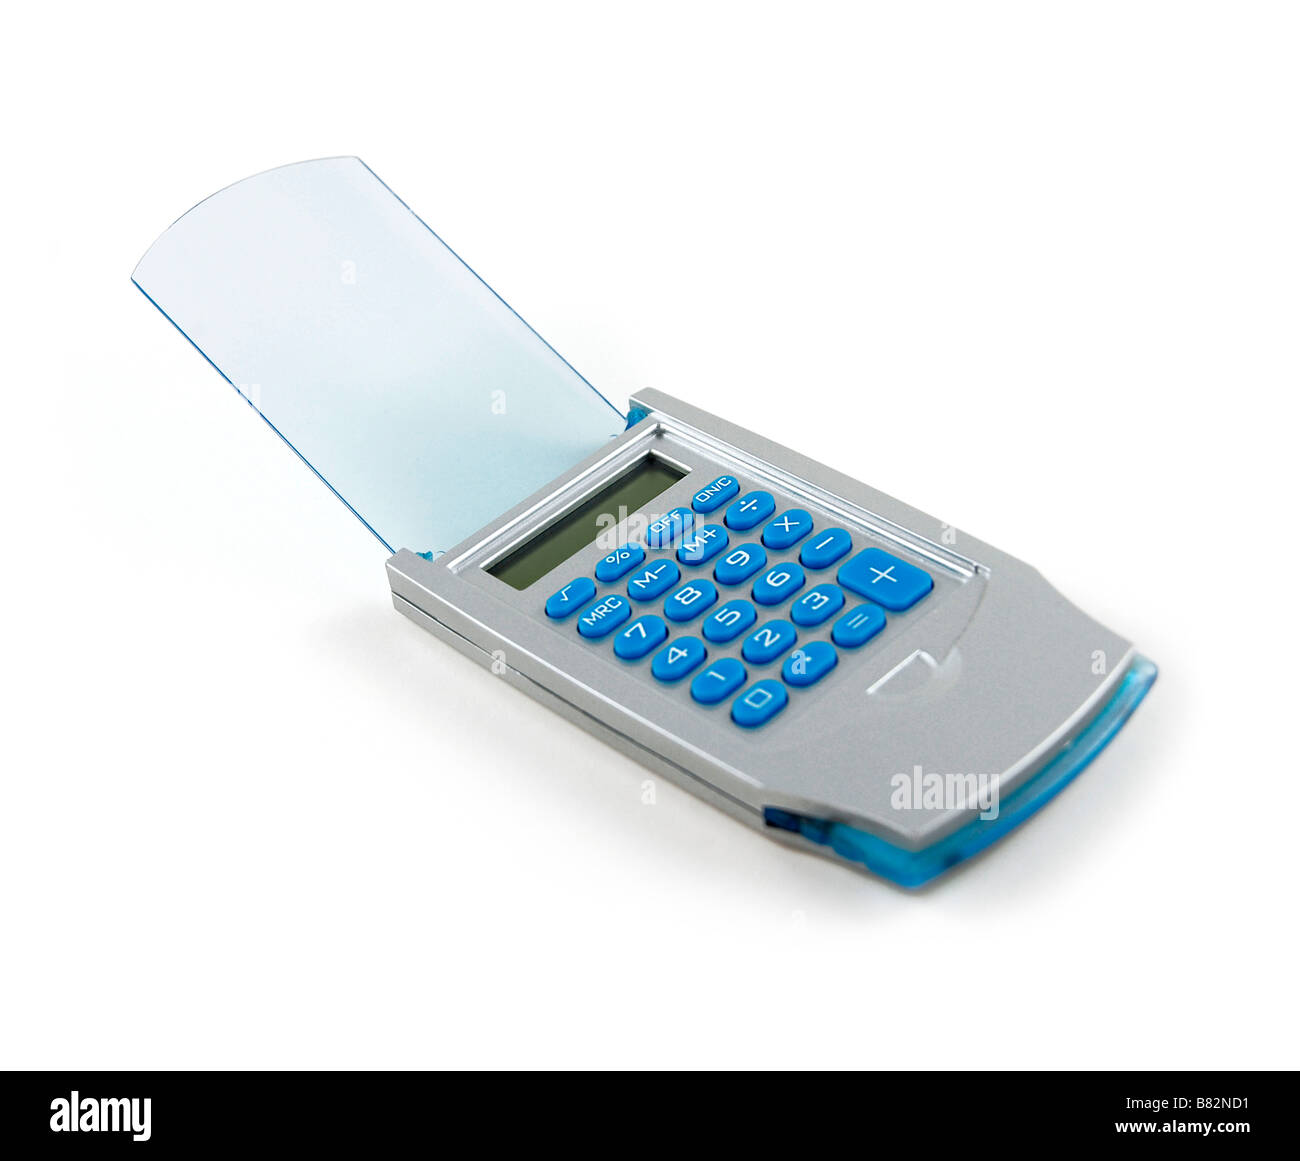 A pocket calculator. Stock Photo